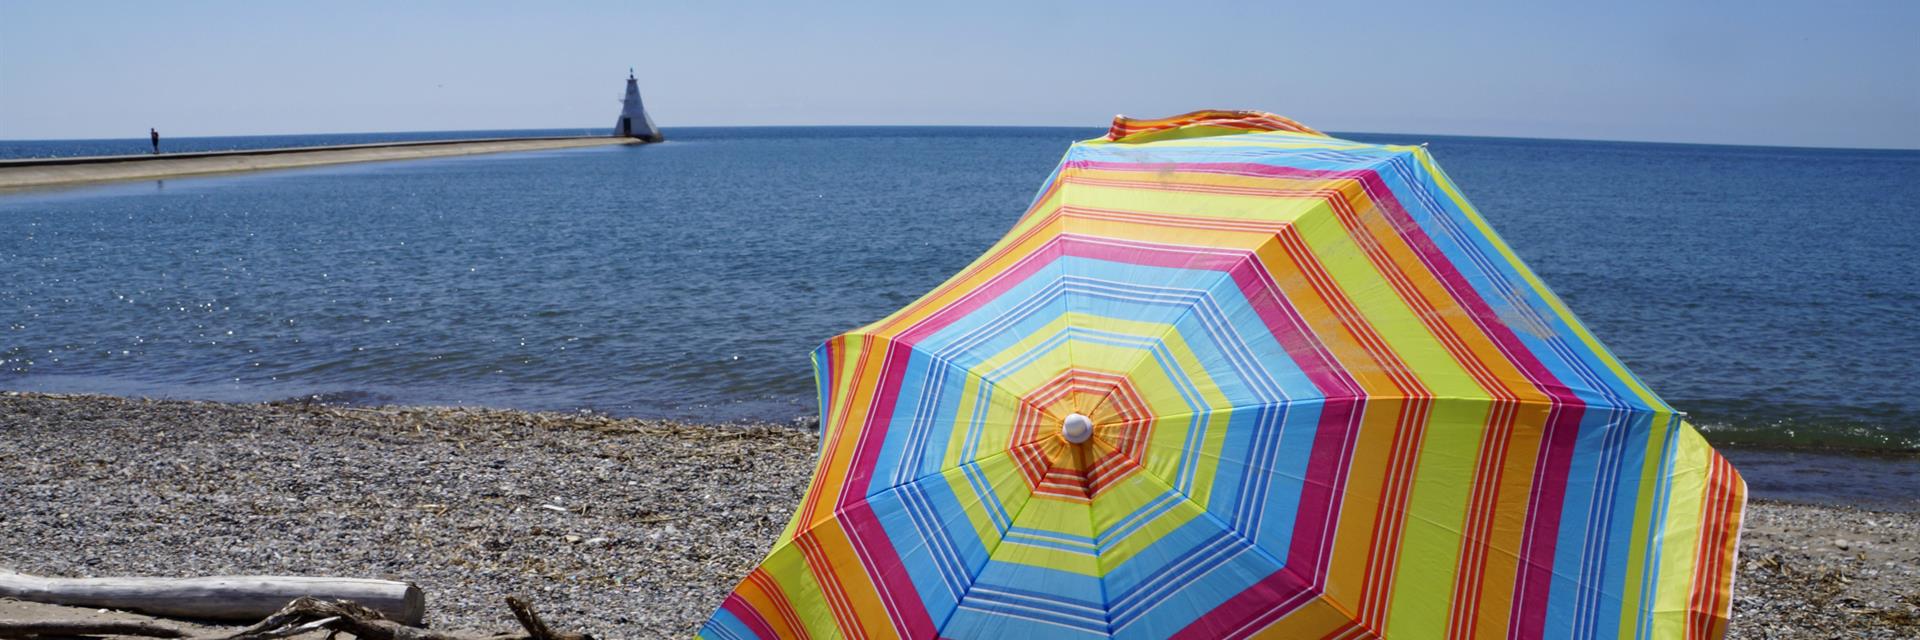 Erieau Light House in Summer with beach umbrella